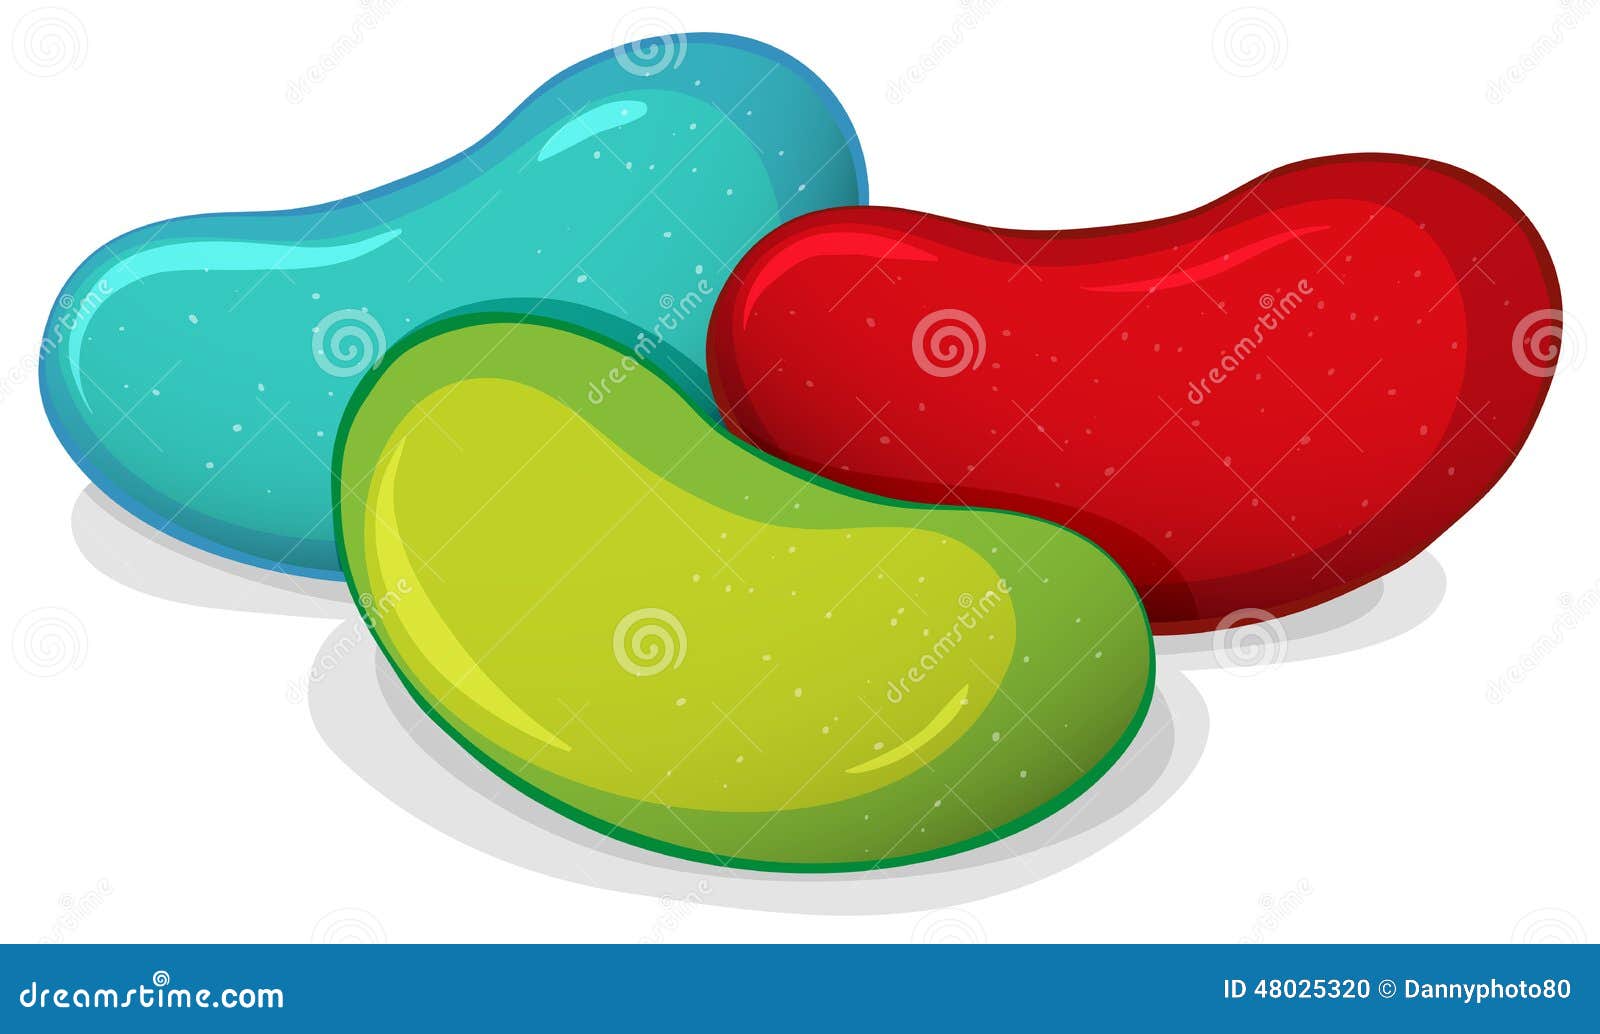 Tasty Colorful Jellybeans On White Background Vector Illustration | CartoonDealer.com #121635968